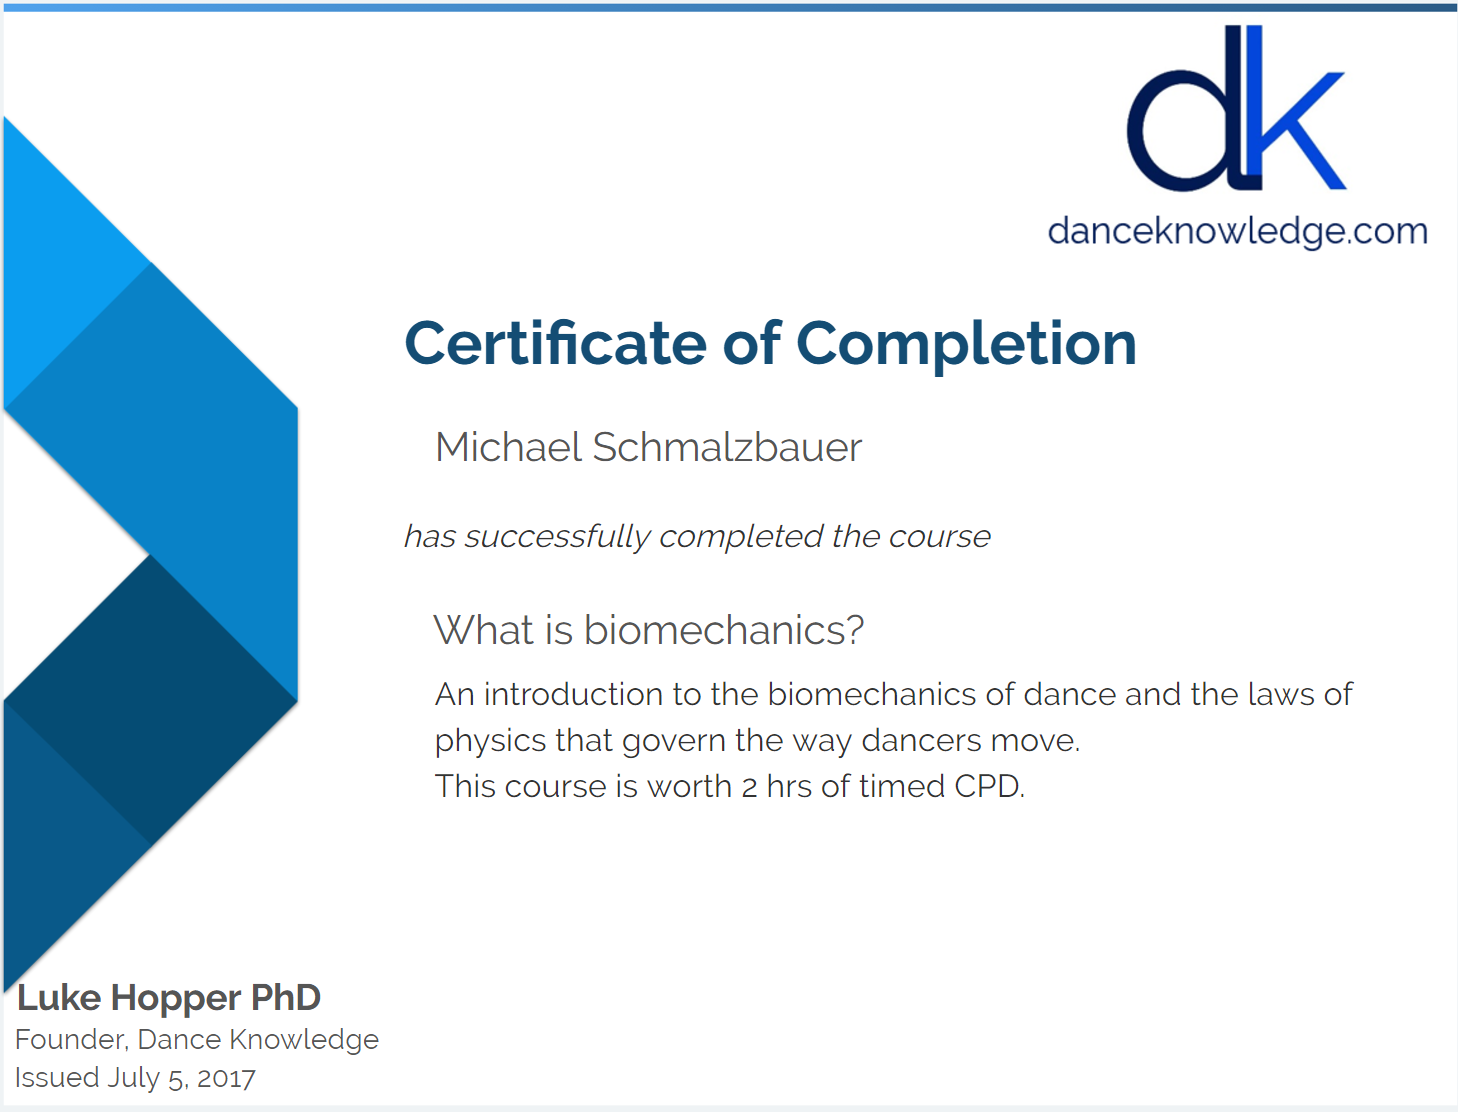 Dance Knowledge – Biomechanic/Certificate